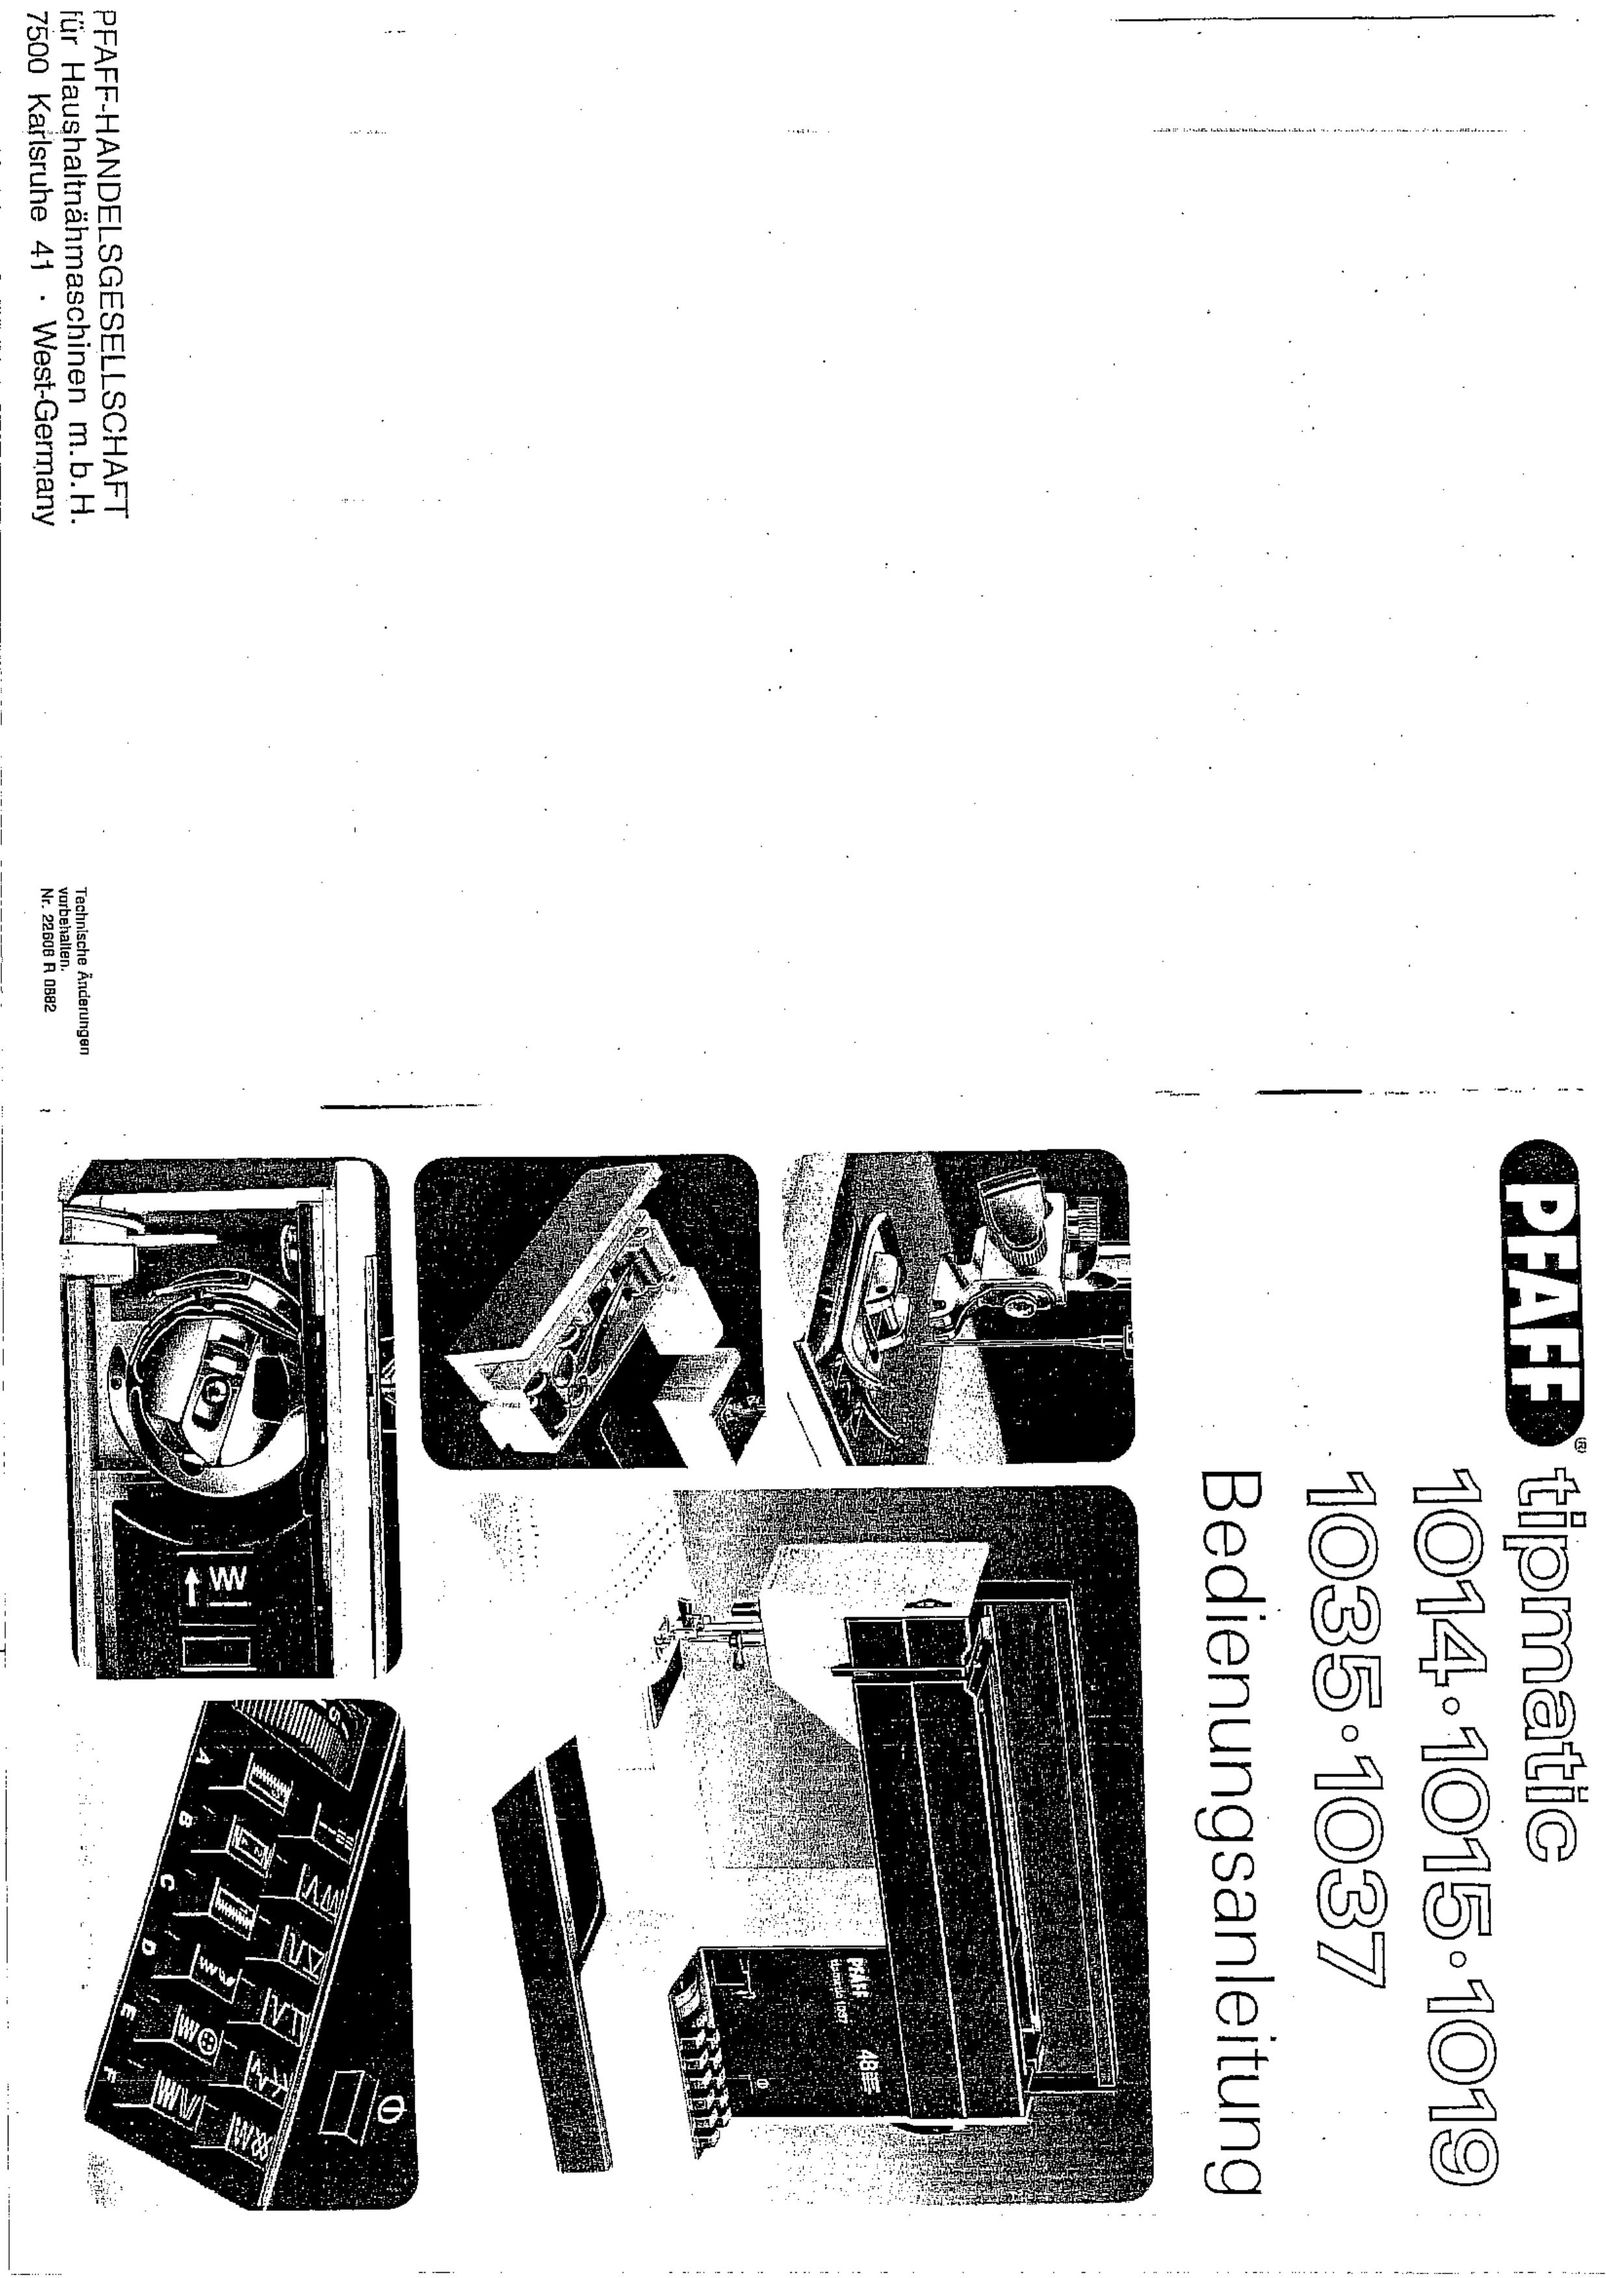 Pfaff 1037 Sewing Machine User Manual